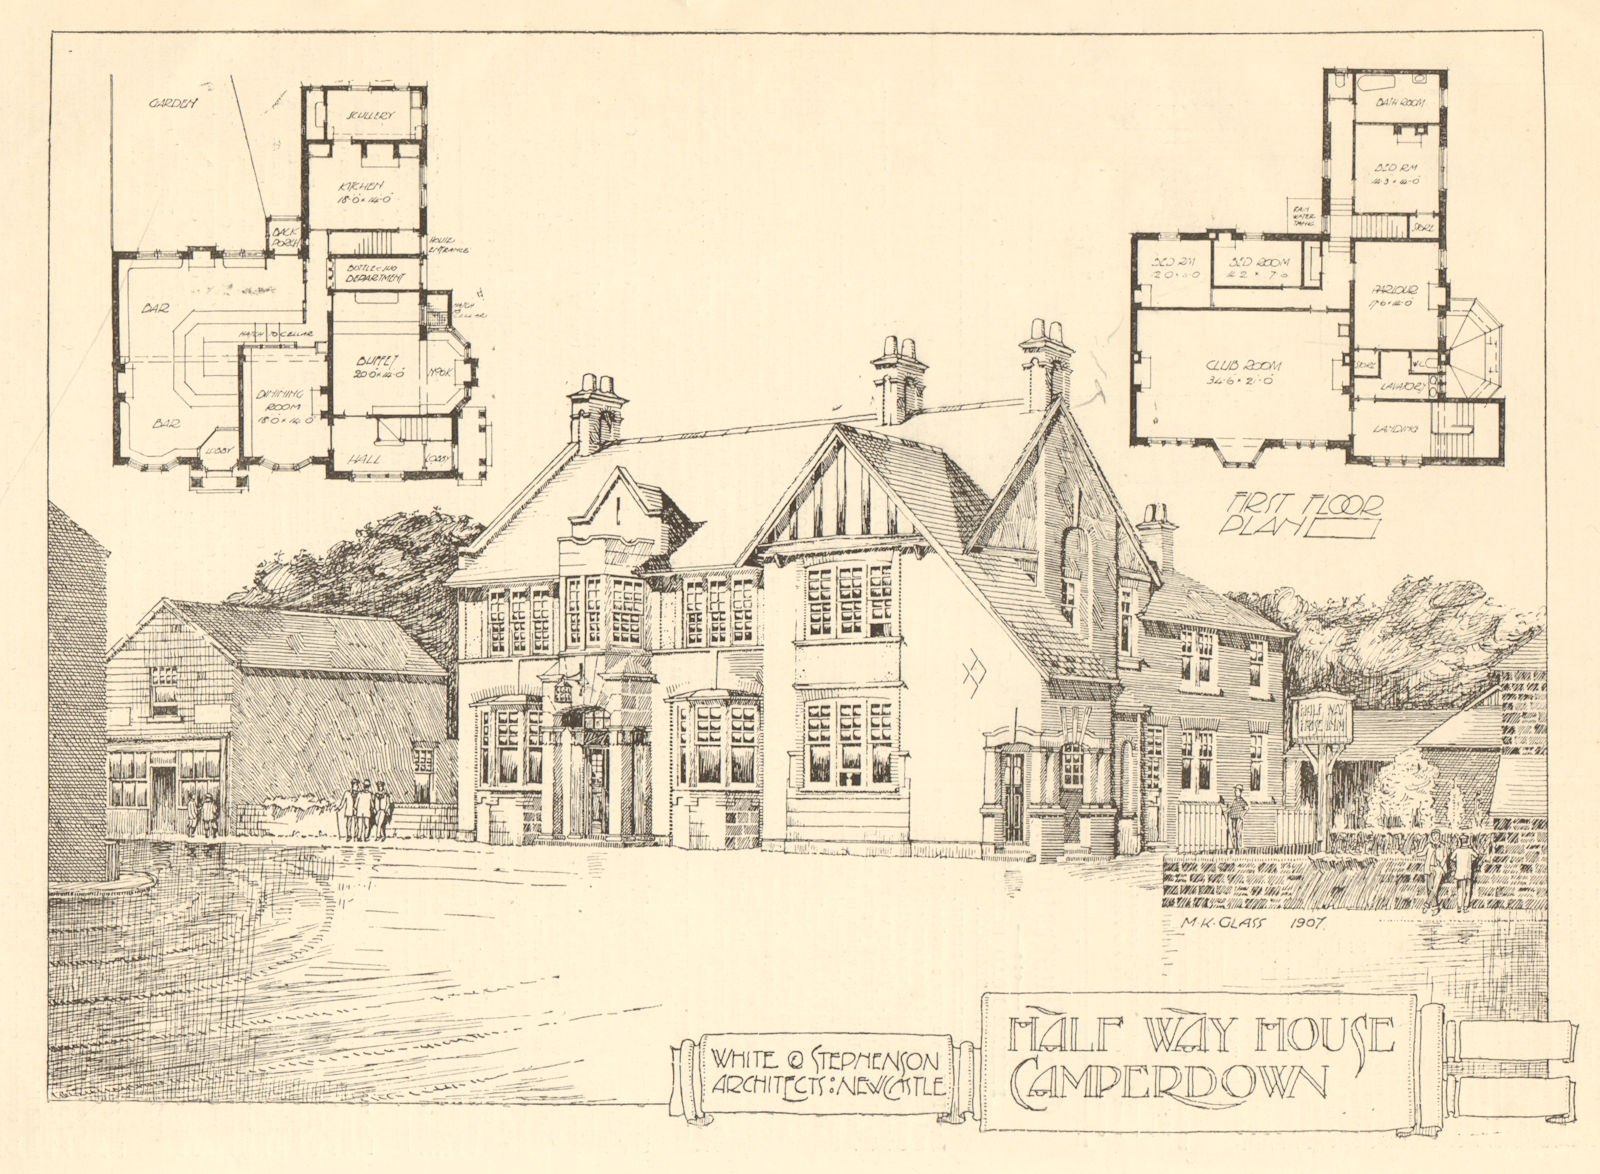 Halfway house Station Rd Camperdown Newcastle-upon-Tyne. White & Stephenson 1907